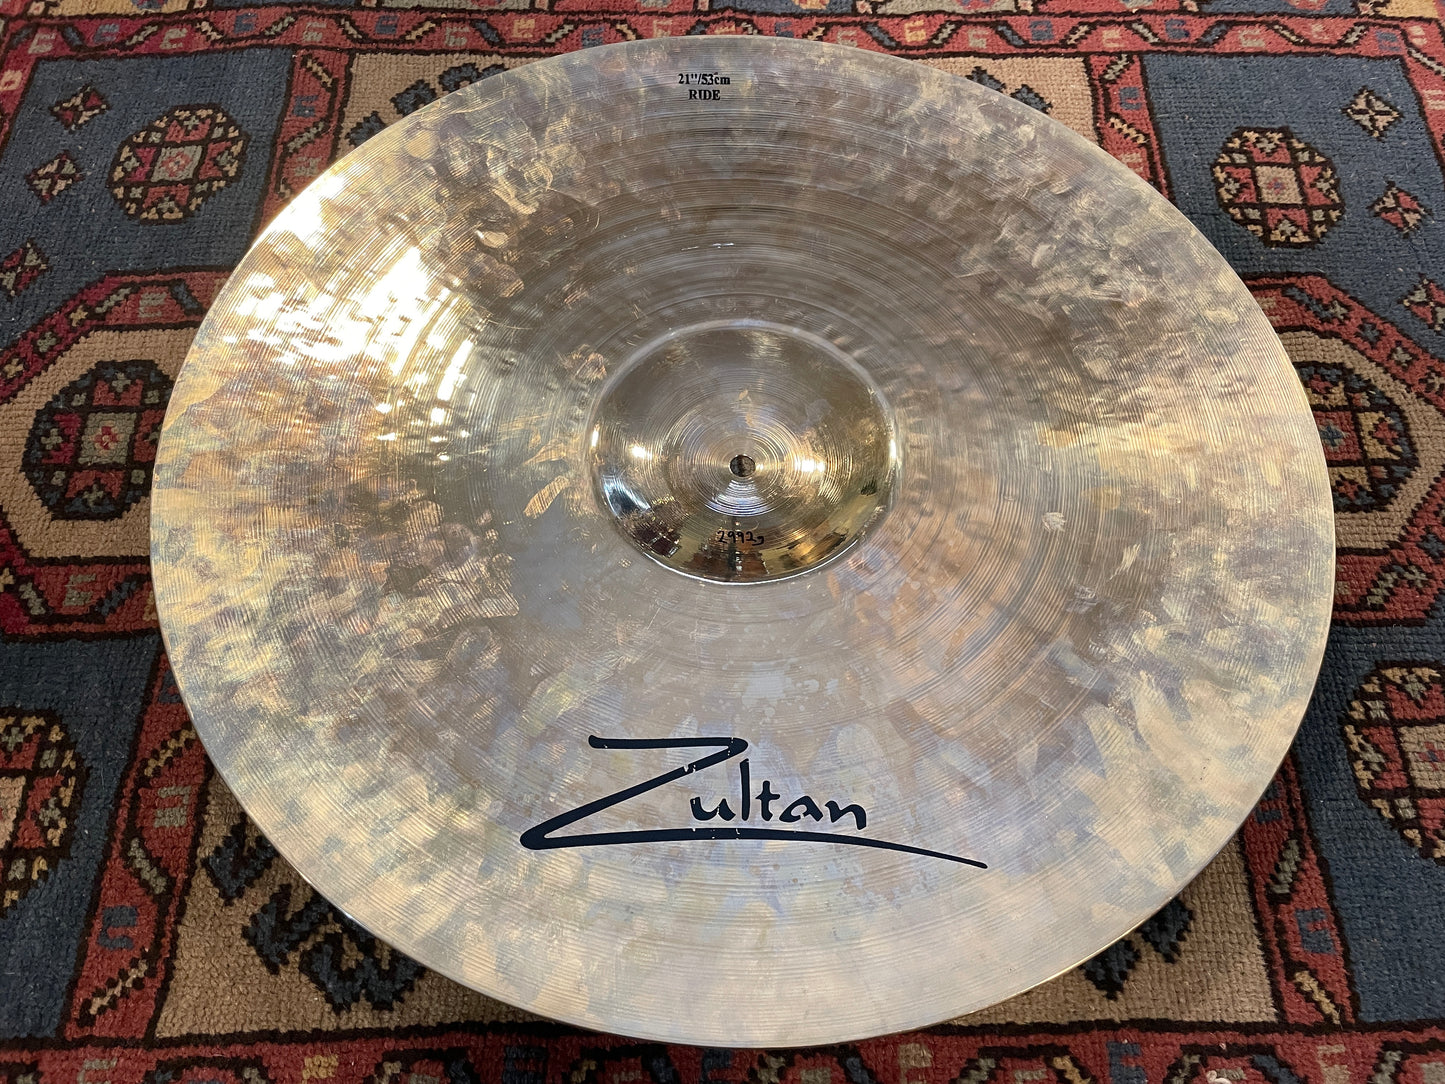 21" Zultan Q Series Ride Cymbal 2992g *Video Demo*